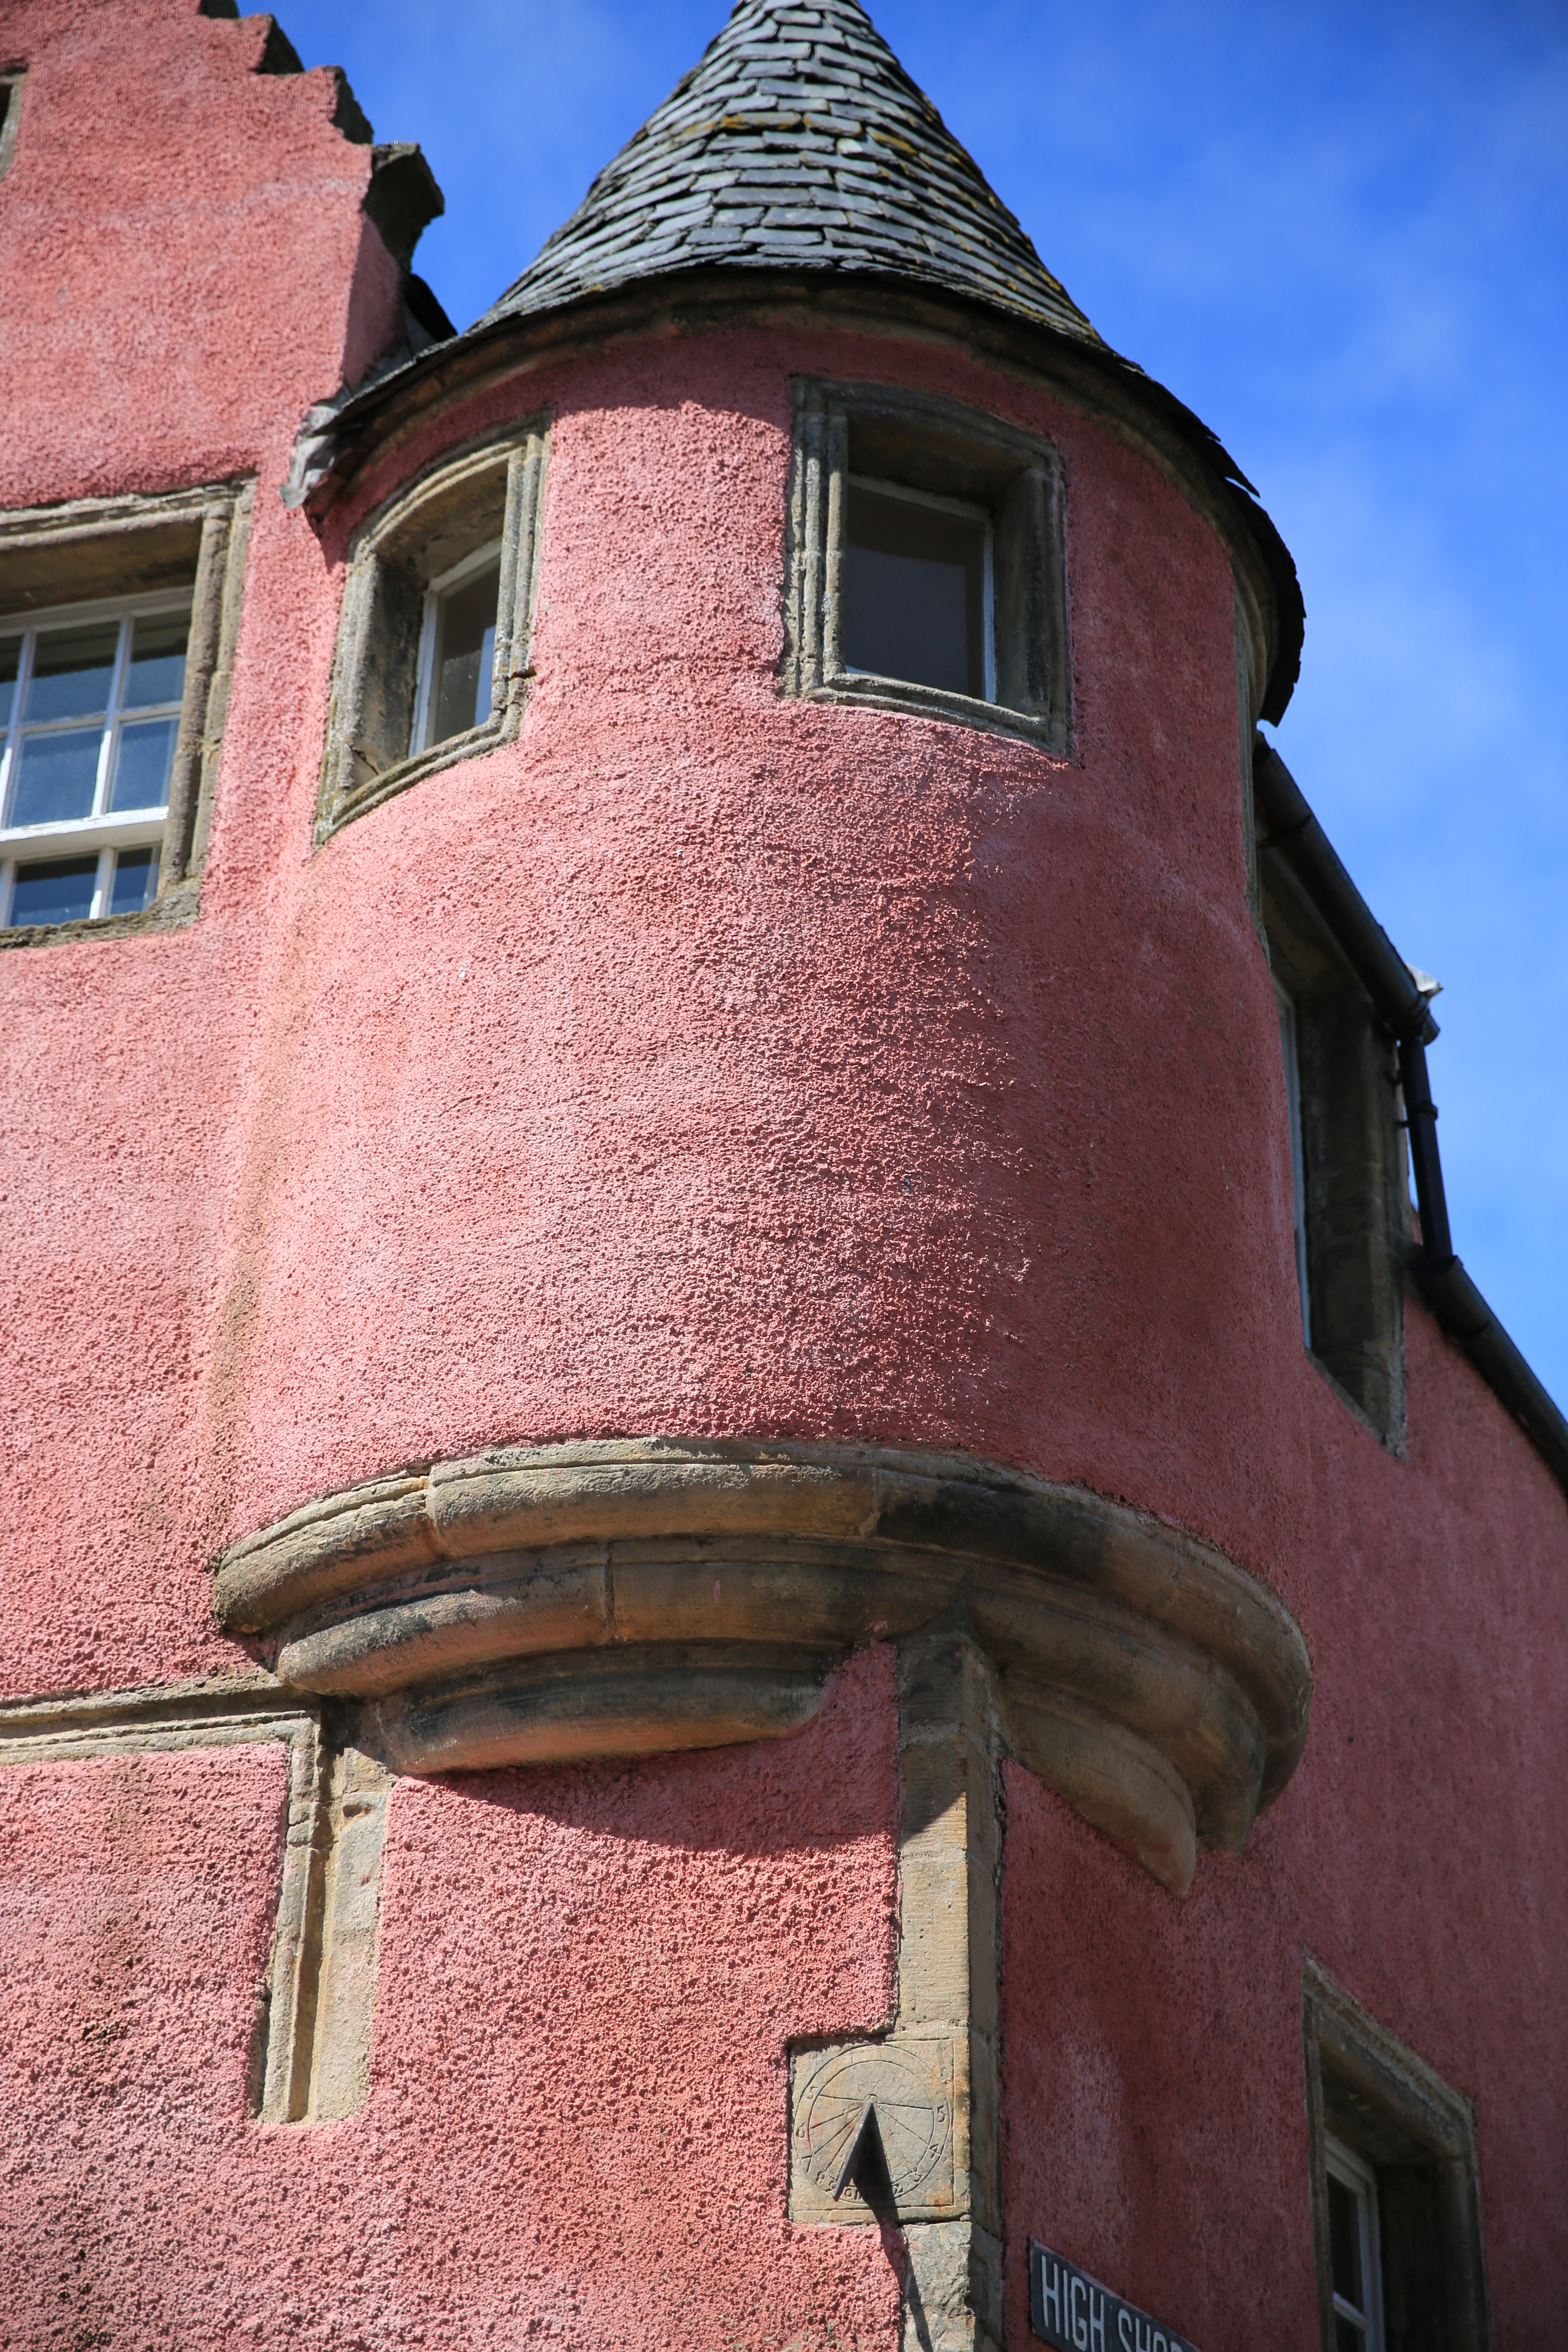 Castles-of-the-Moray-Coast - merchants-house-banff-2-of-2_15801102448_o.jpg